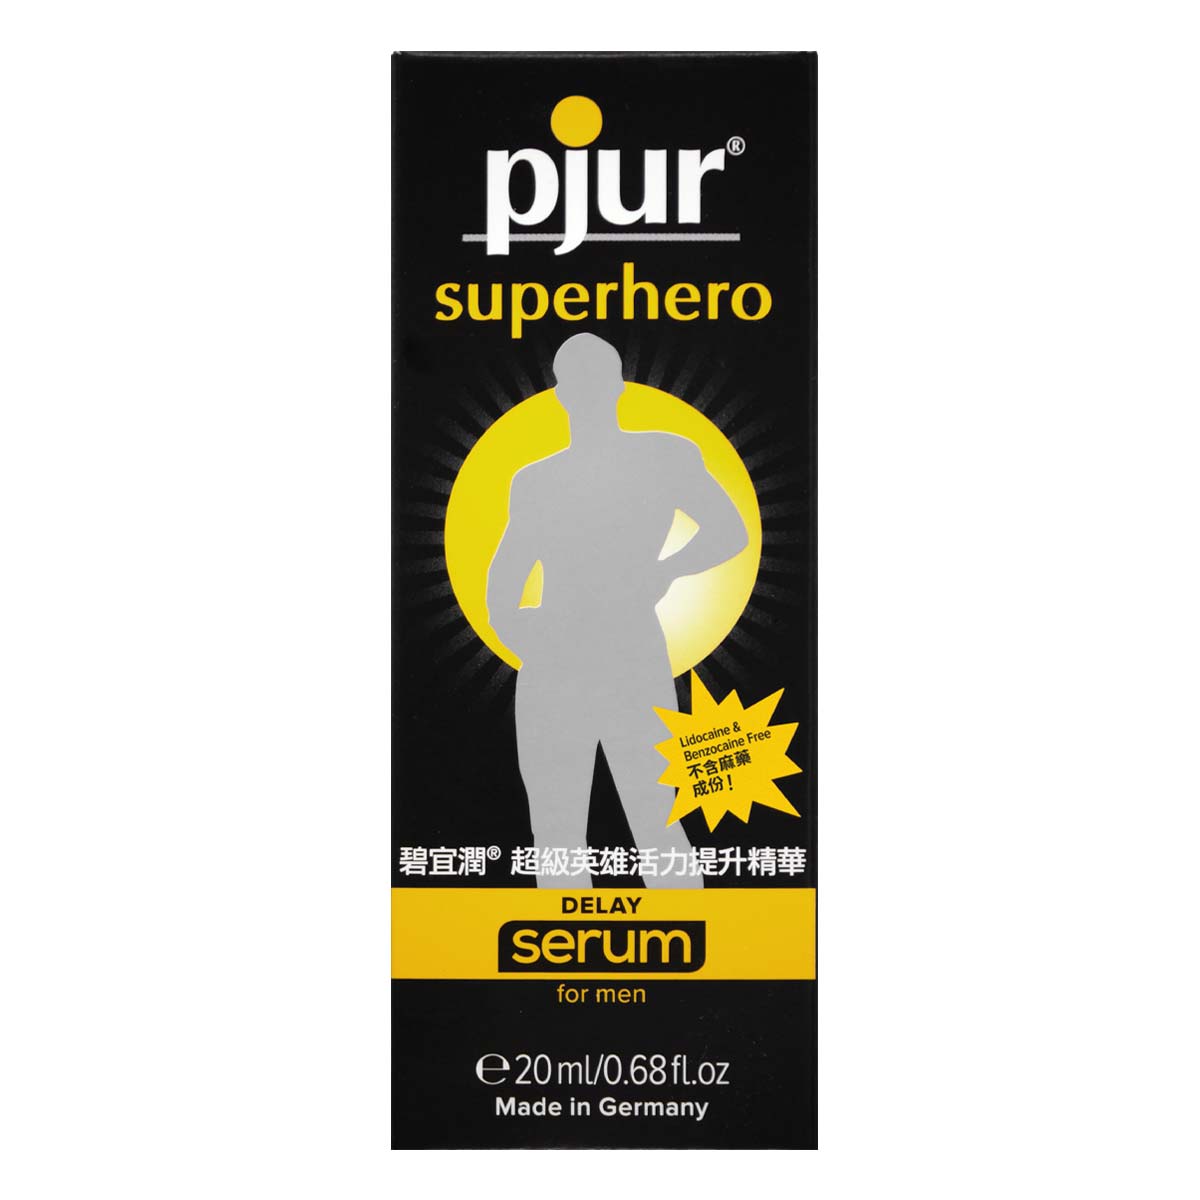 pjur superhero DELAY serum 20ml  (Defective Packaging)-p_2